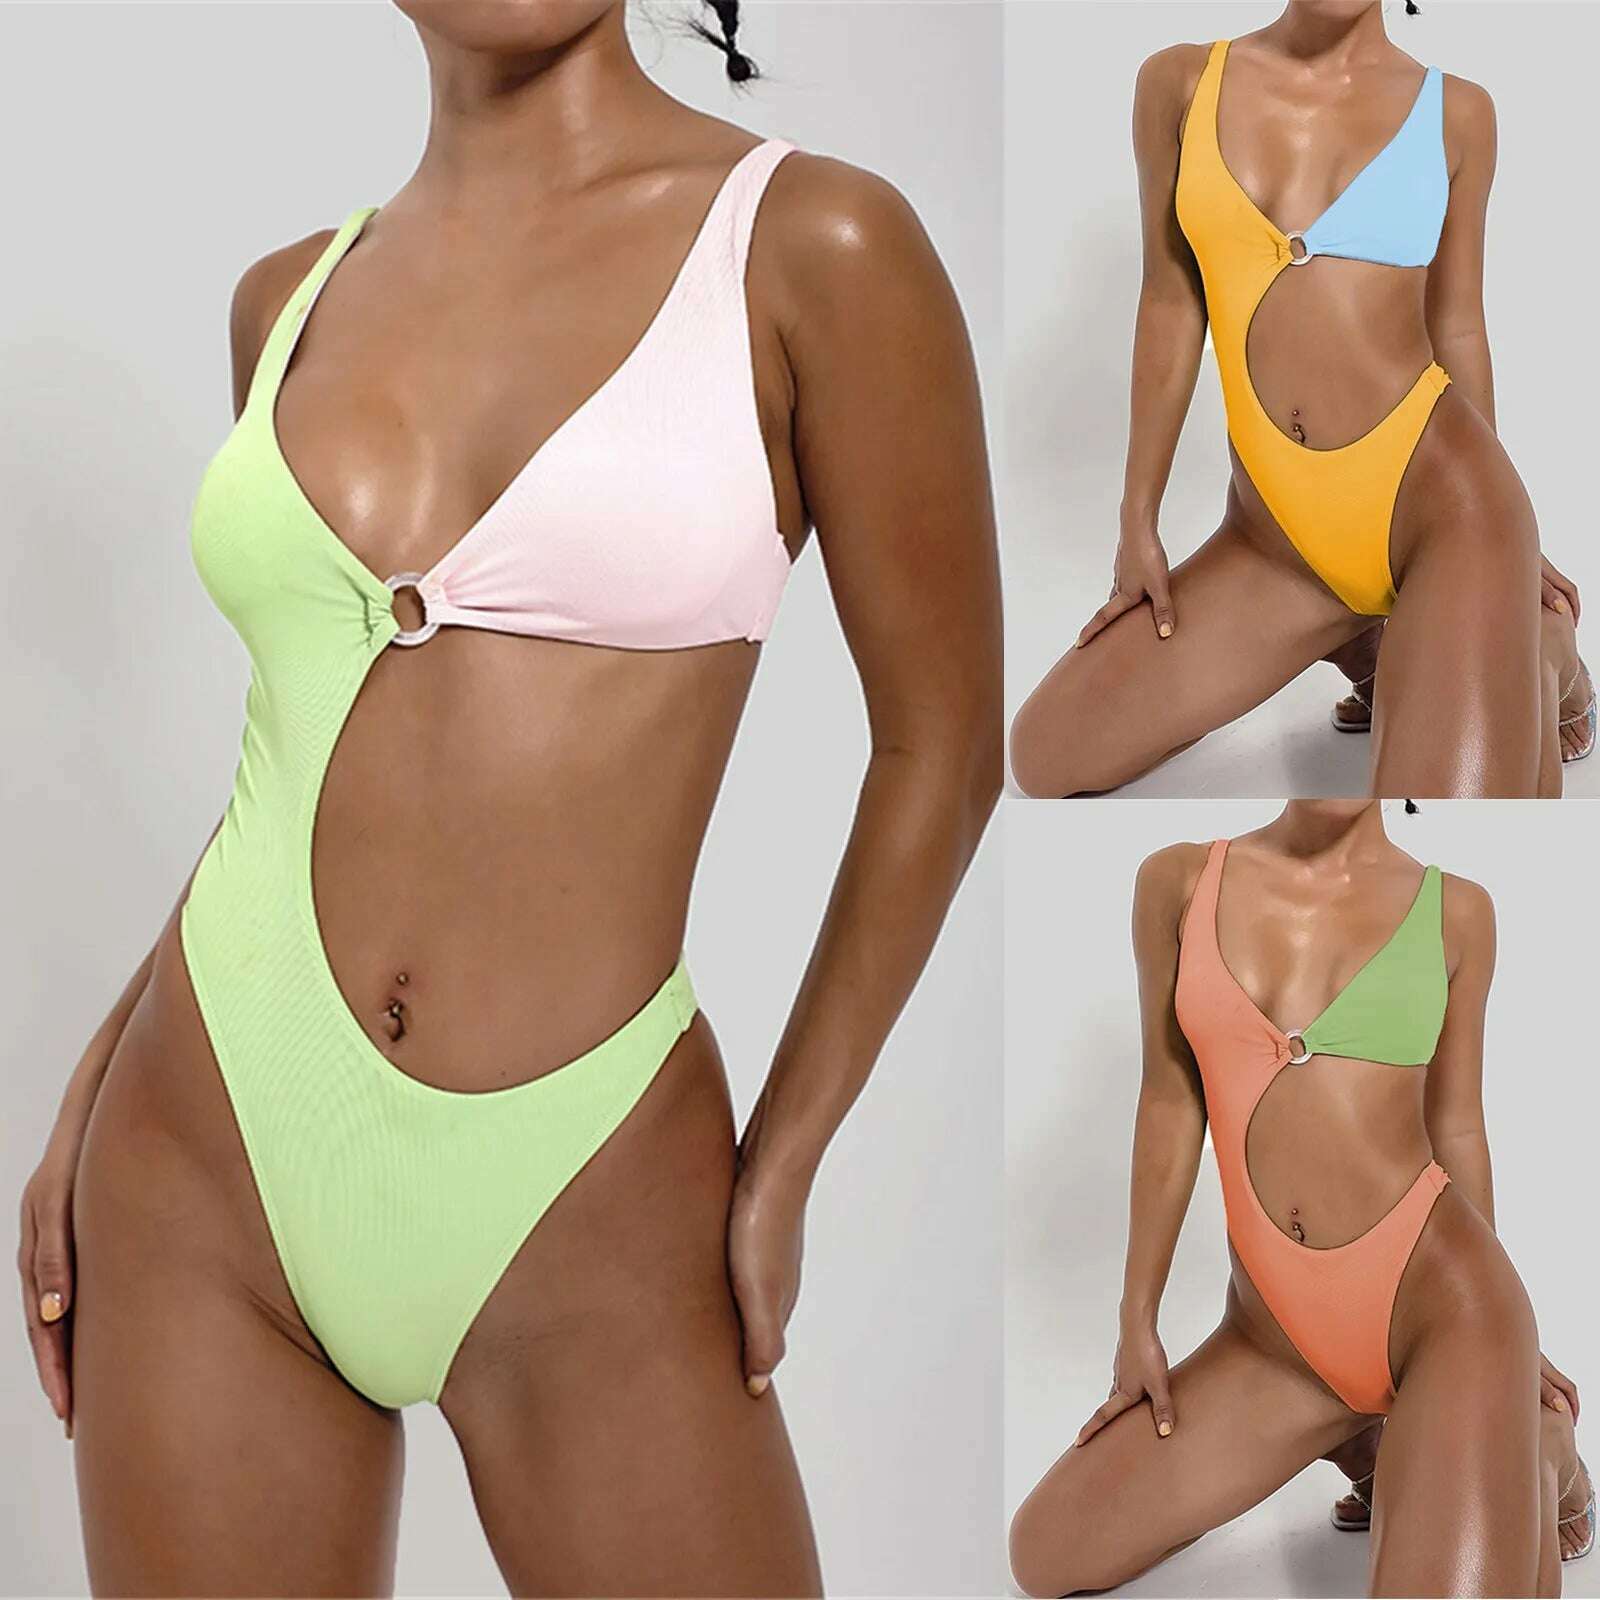 KIMLUD, Women Swimwear Contrast Solid Color Swimsuit Bikini Swimming Beachwear High Waist Female Bathing Suit Biquinis, Yellow / L / United States, KIMLUD Womens Clothes